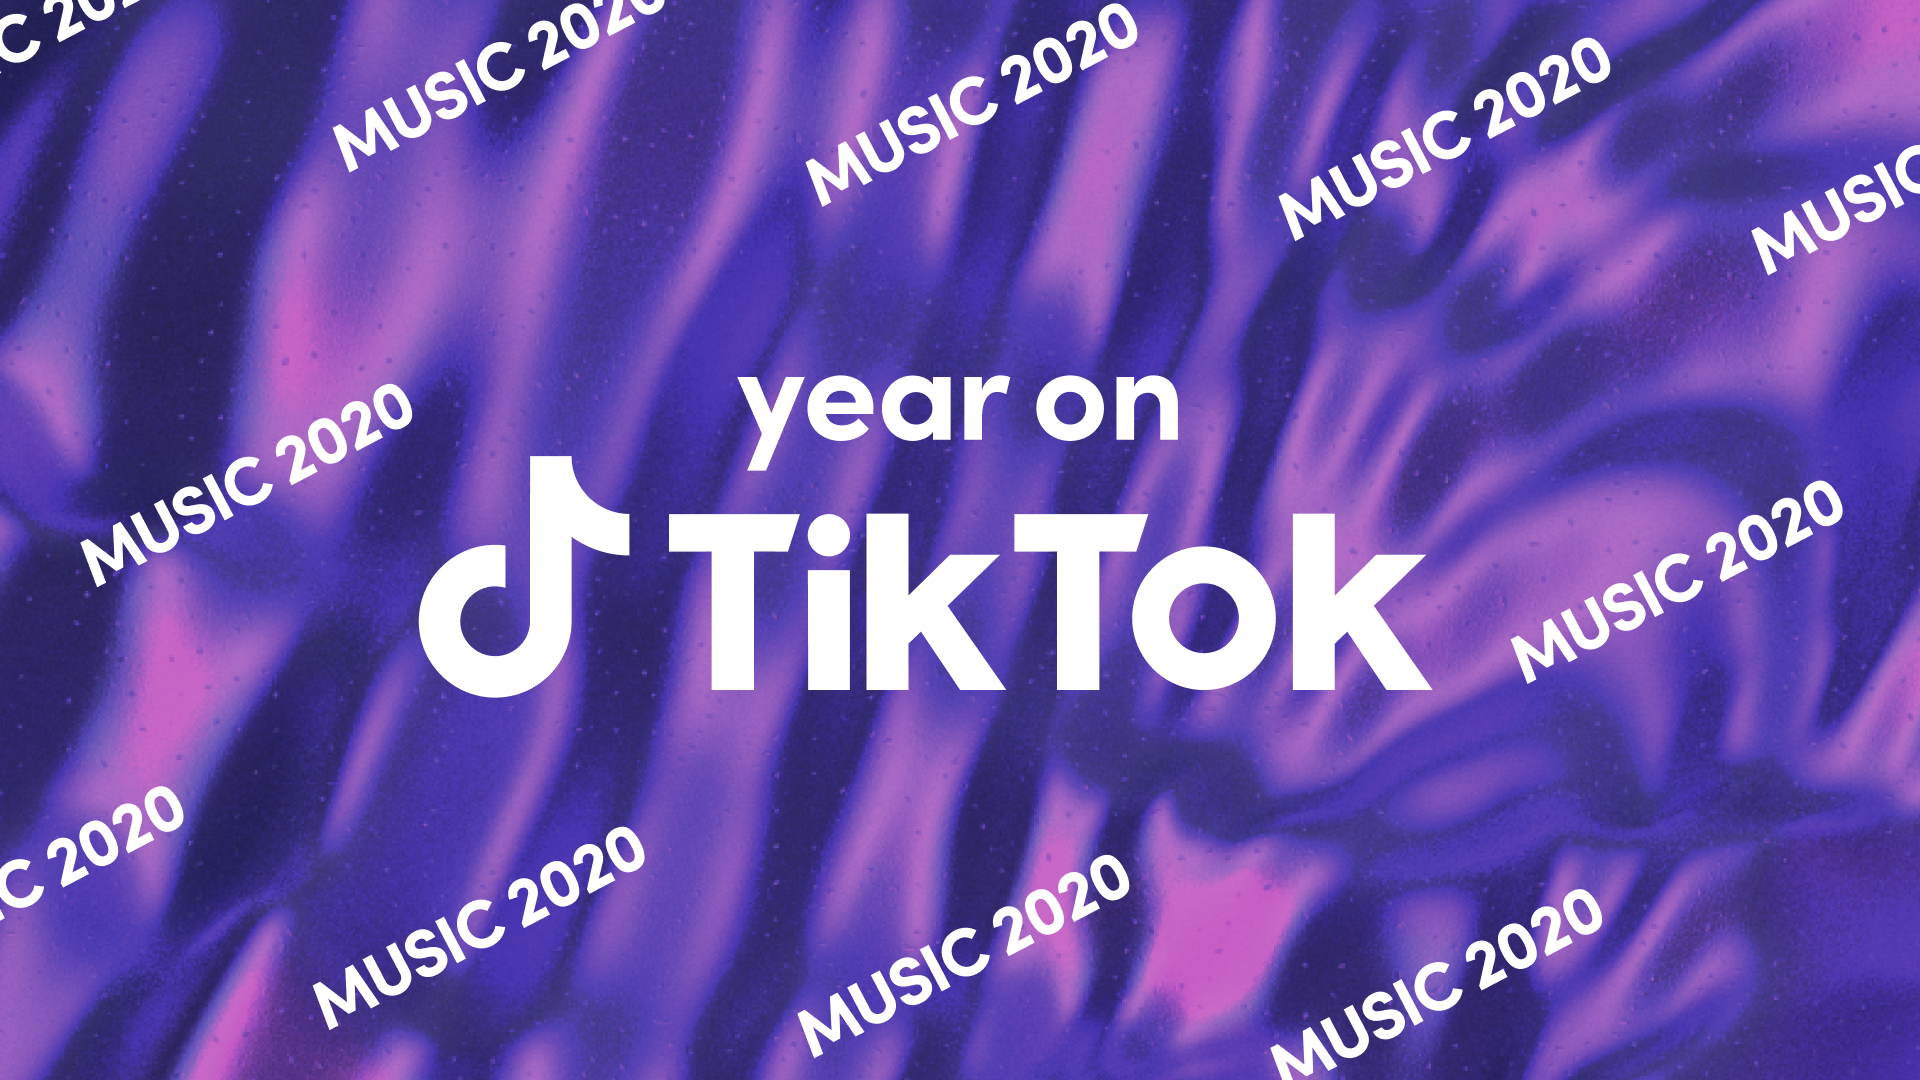 Year on TikTok: Music 2020 – Iconic: Legendary Acts On TikTok